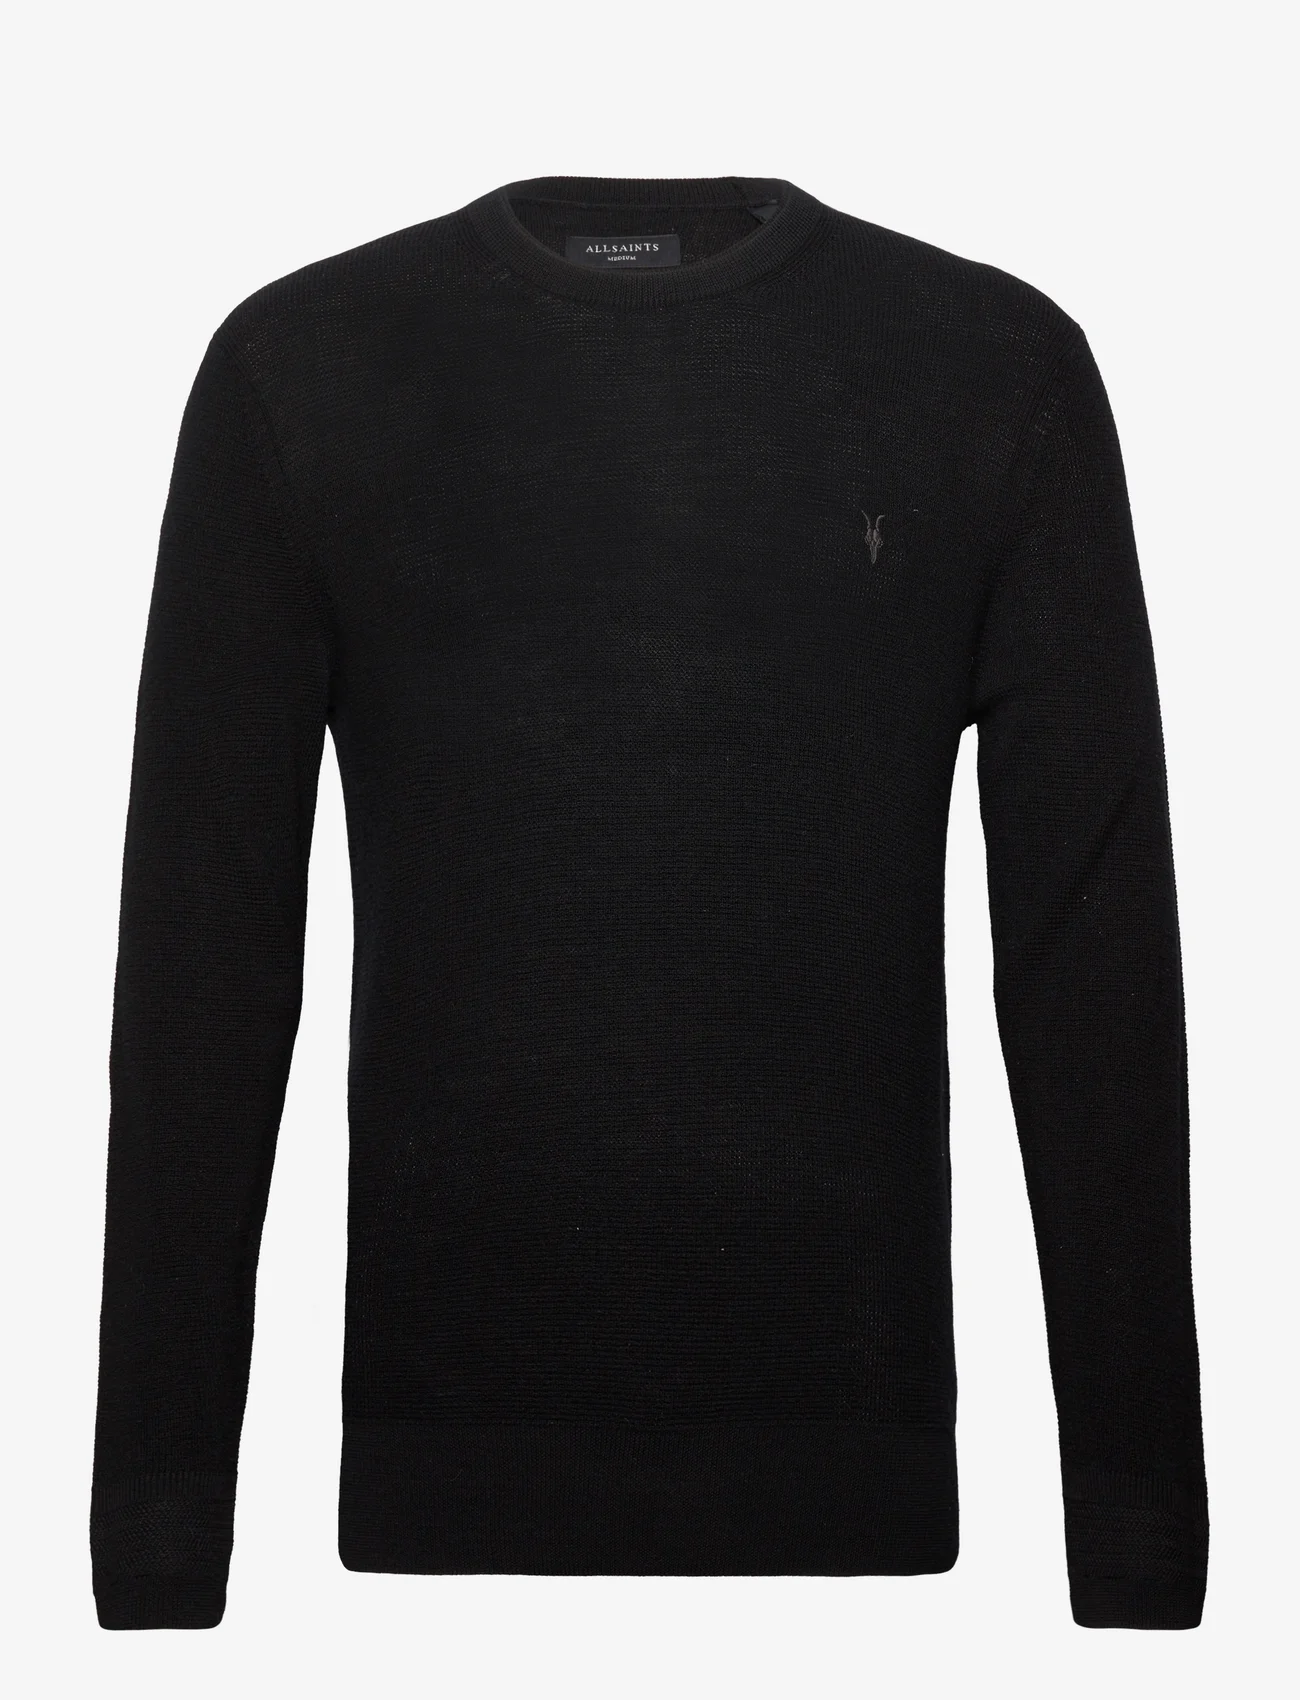 AllSaints - ivar merino crew - basic knitwear - black - 0